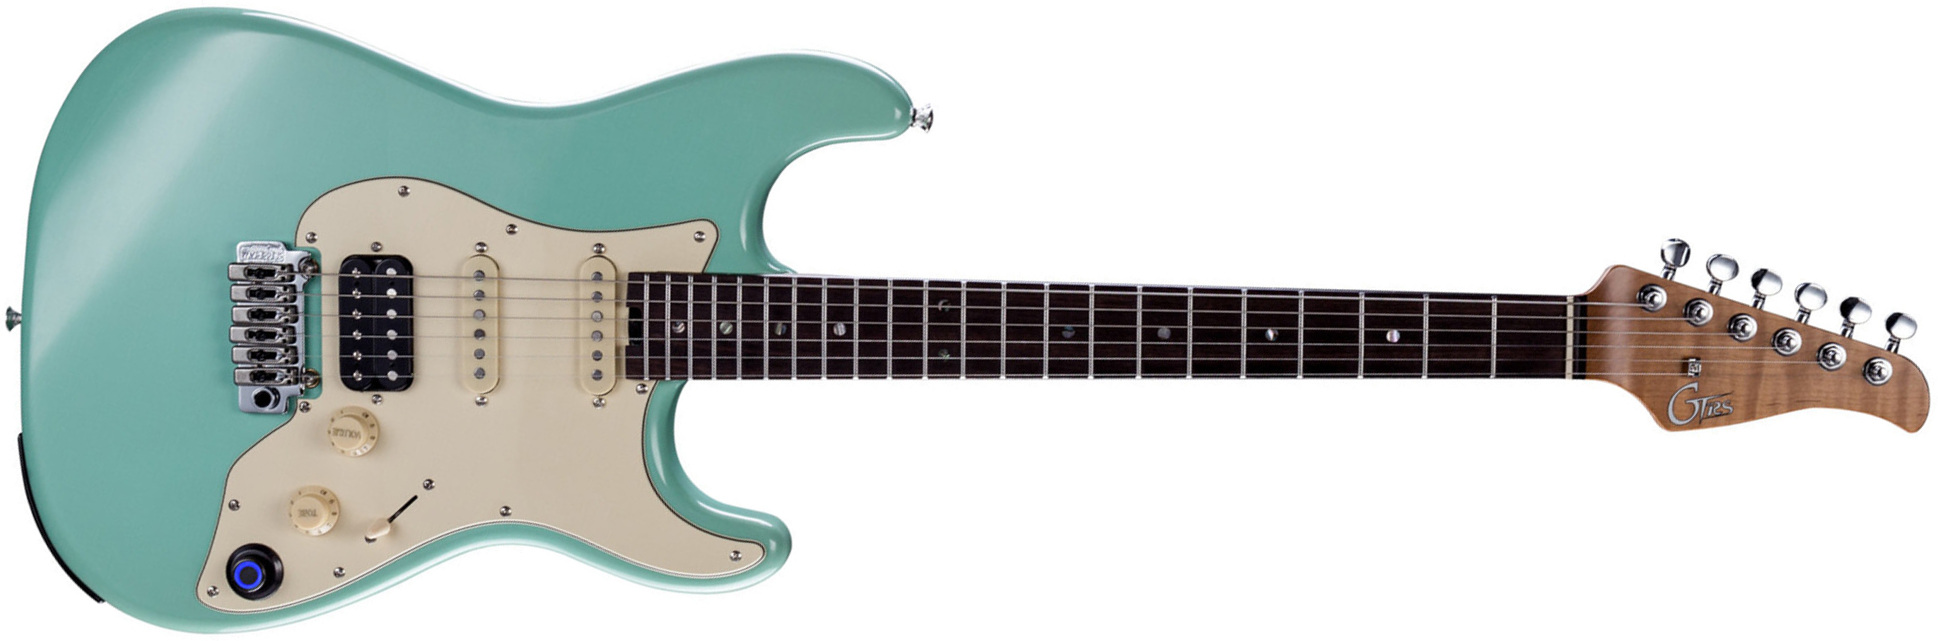 Mooer Gtrs P800 Pro Intelligent Guitar Hss Trem Rw - Mint Green - Midi-/Digital-/Modeling Gitarren - Main picture